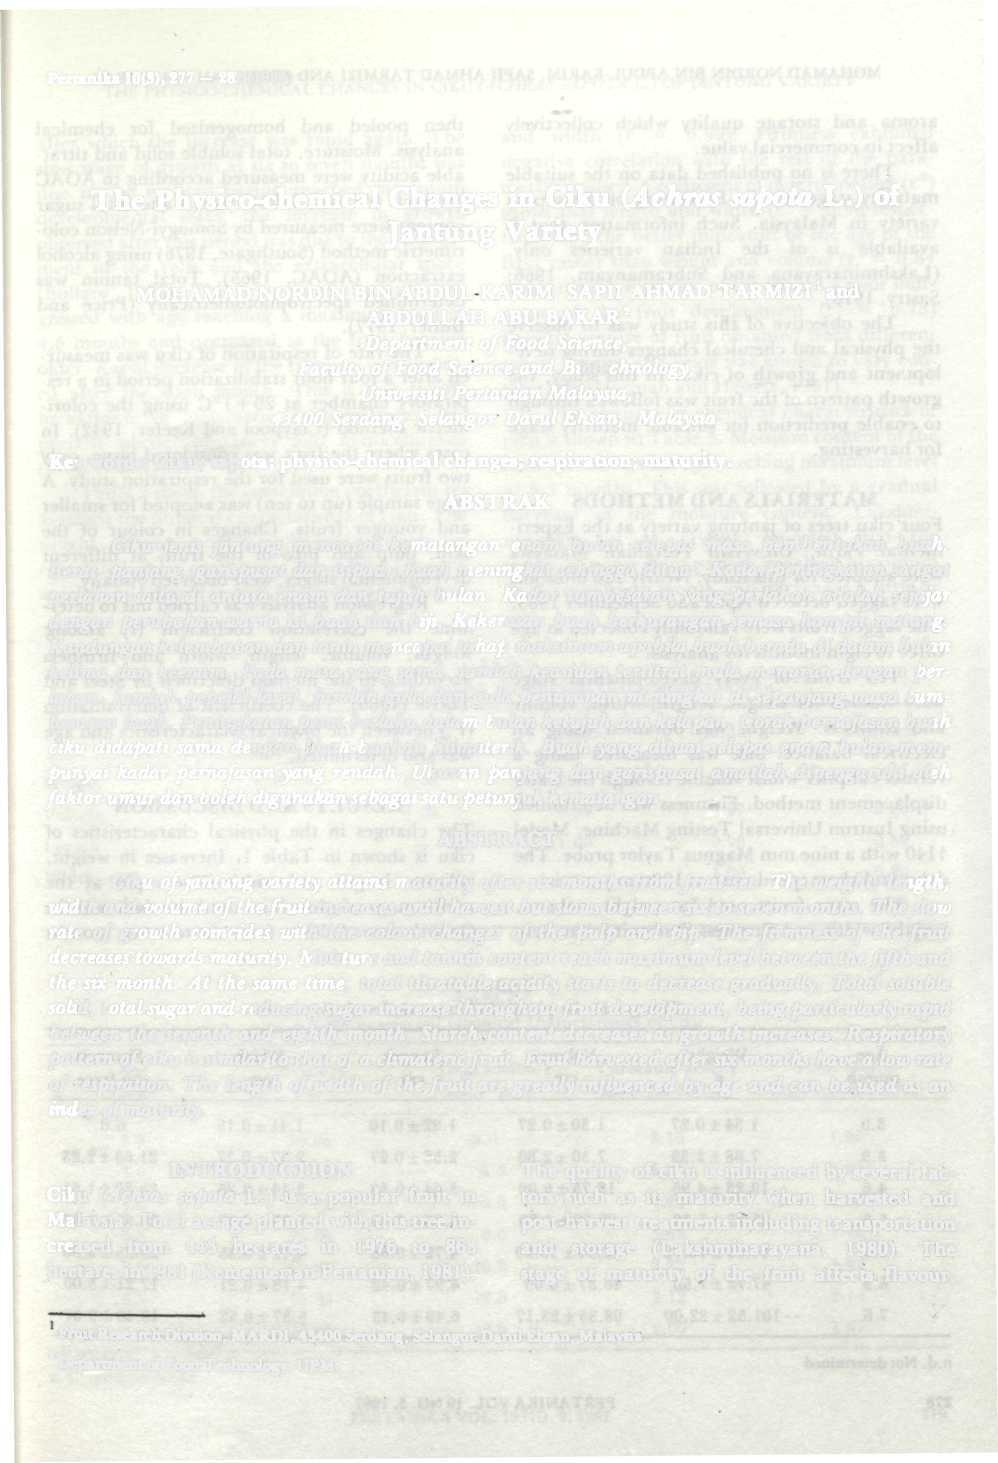 Pertanika 10(3), 277-282 (1987) The Physico-chemical Changes in Ciku (Achras sapota L.